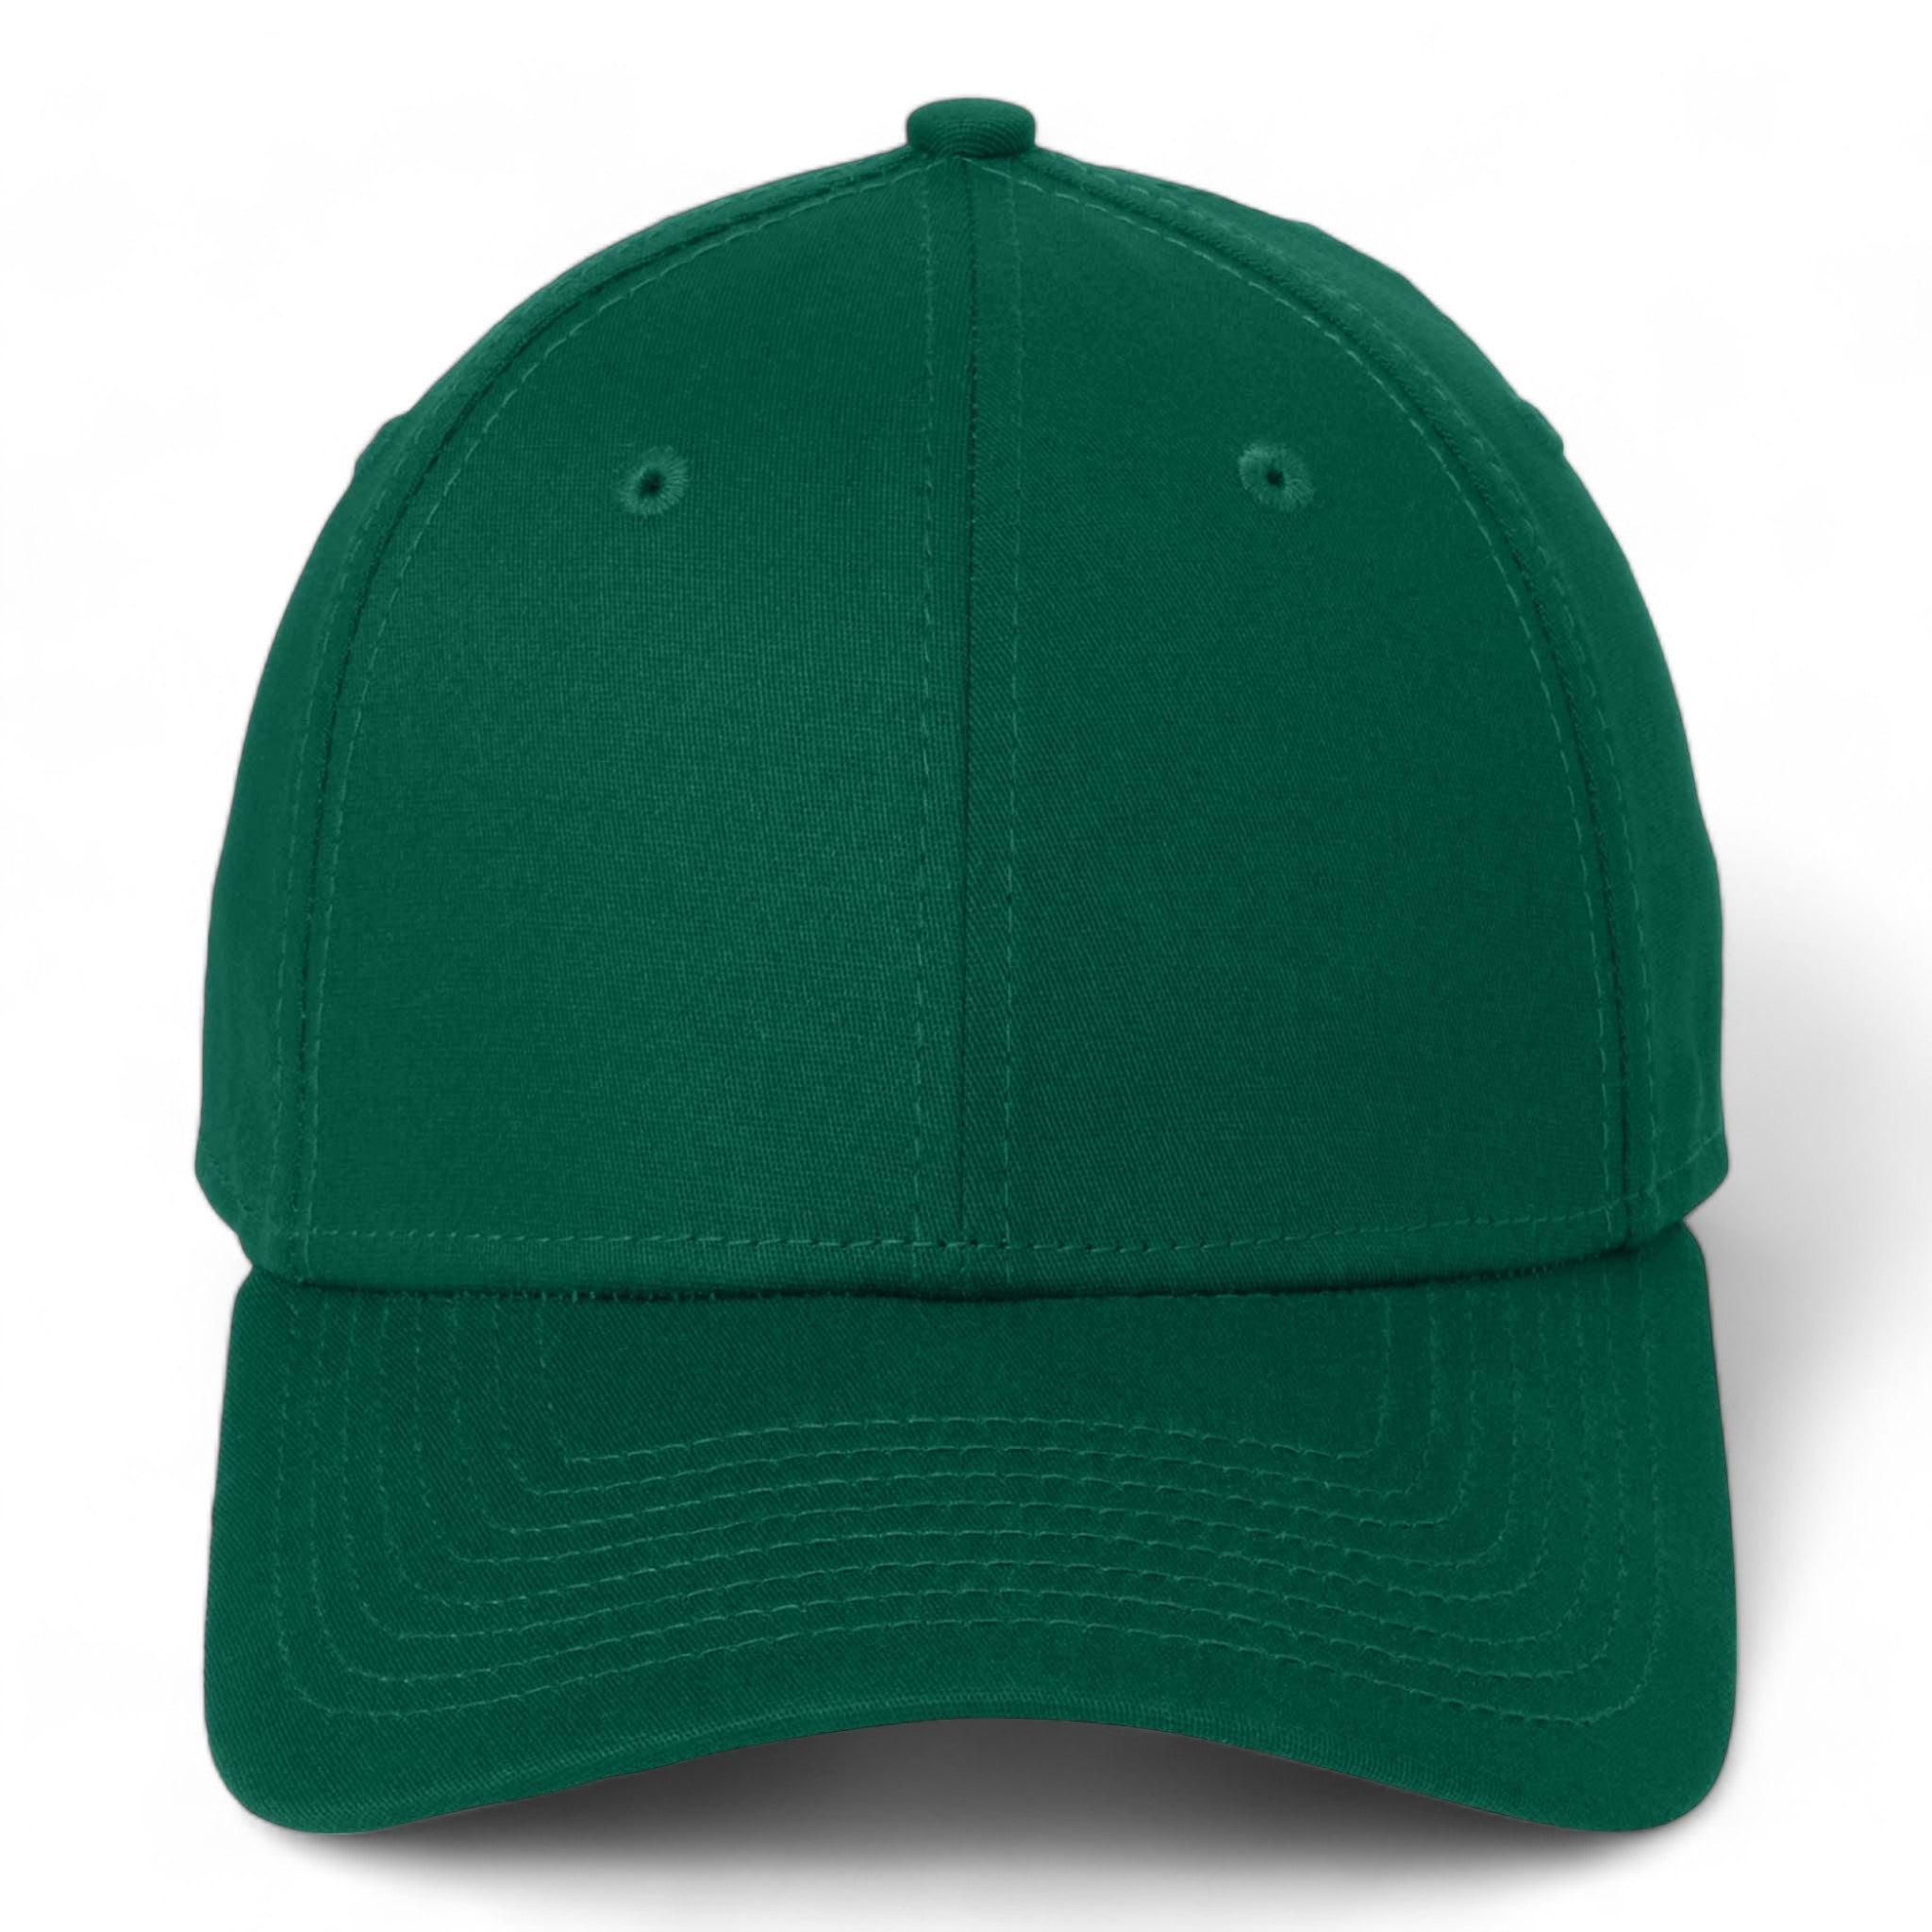 Front view of New Era NE1000 custom hat in dark green